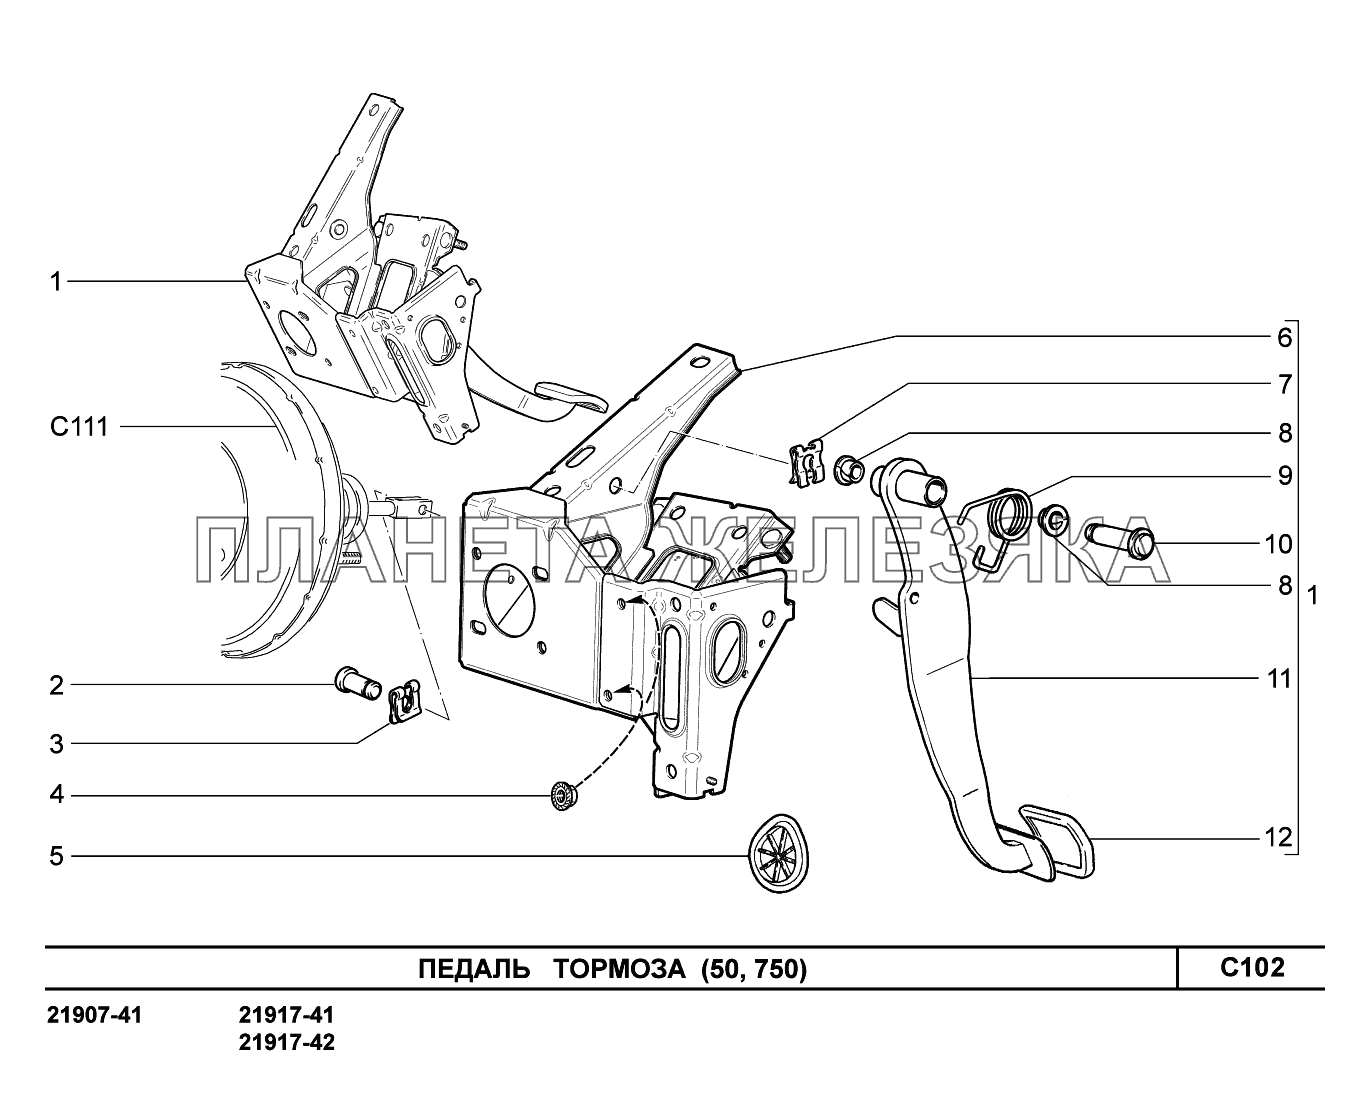 C102. Педаль тормоза Lada Granta-2190